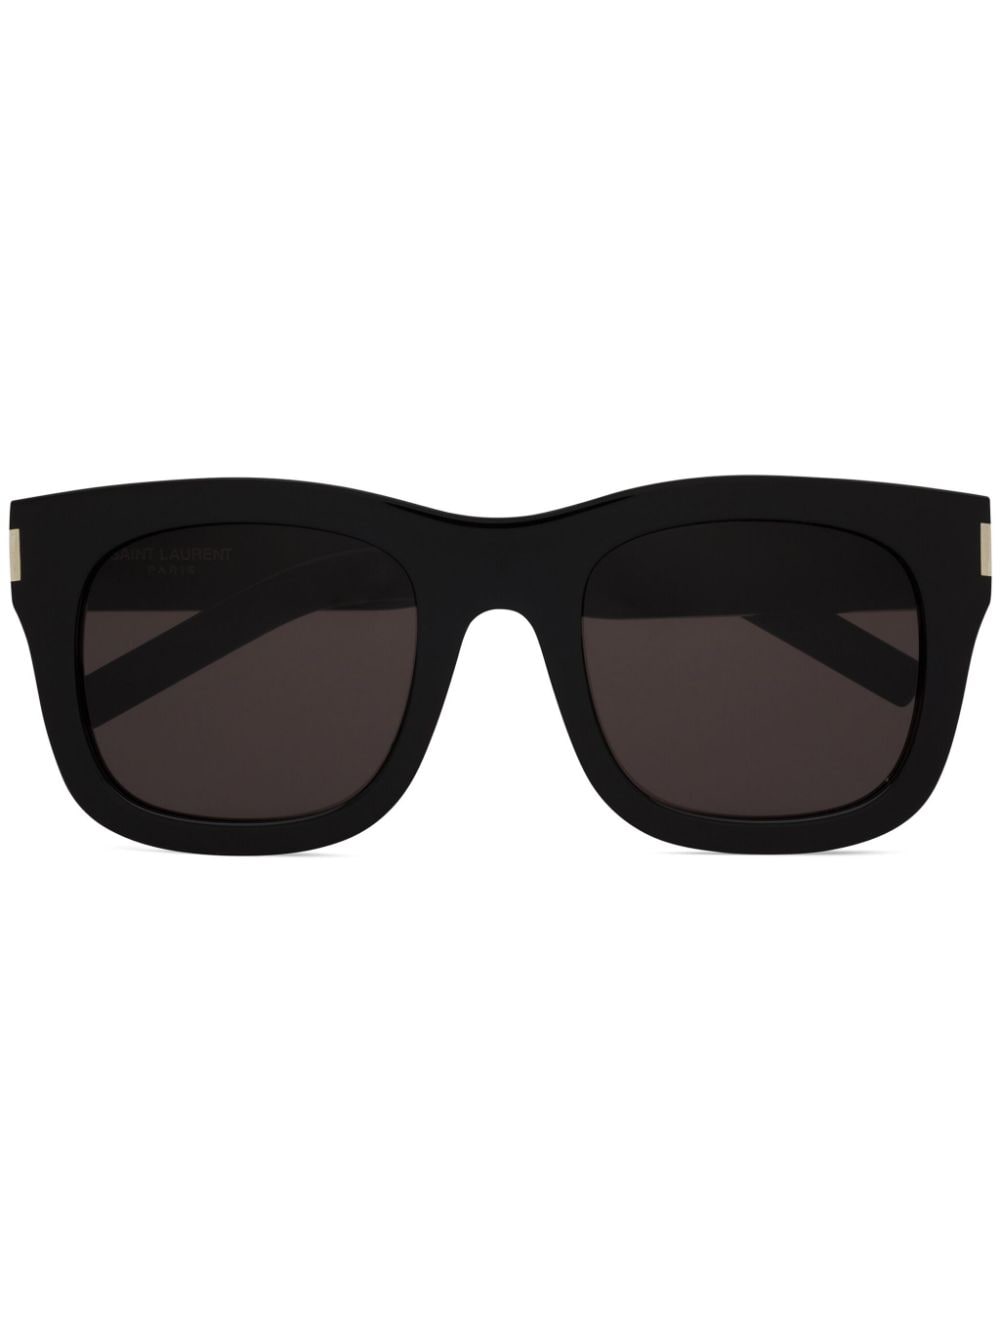 Image 1 of Saint Laurent Eyewear gafas de sol SL 650 Monceau